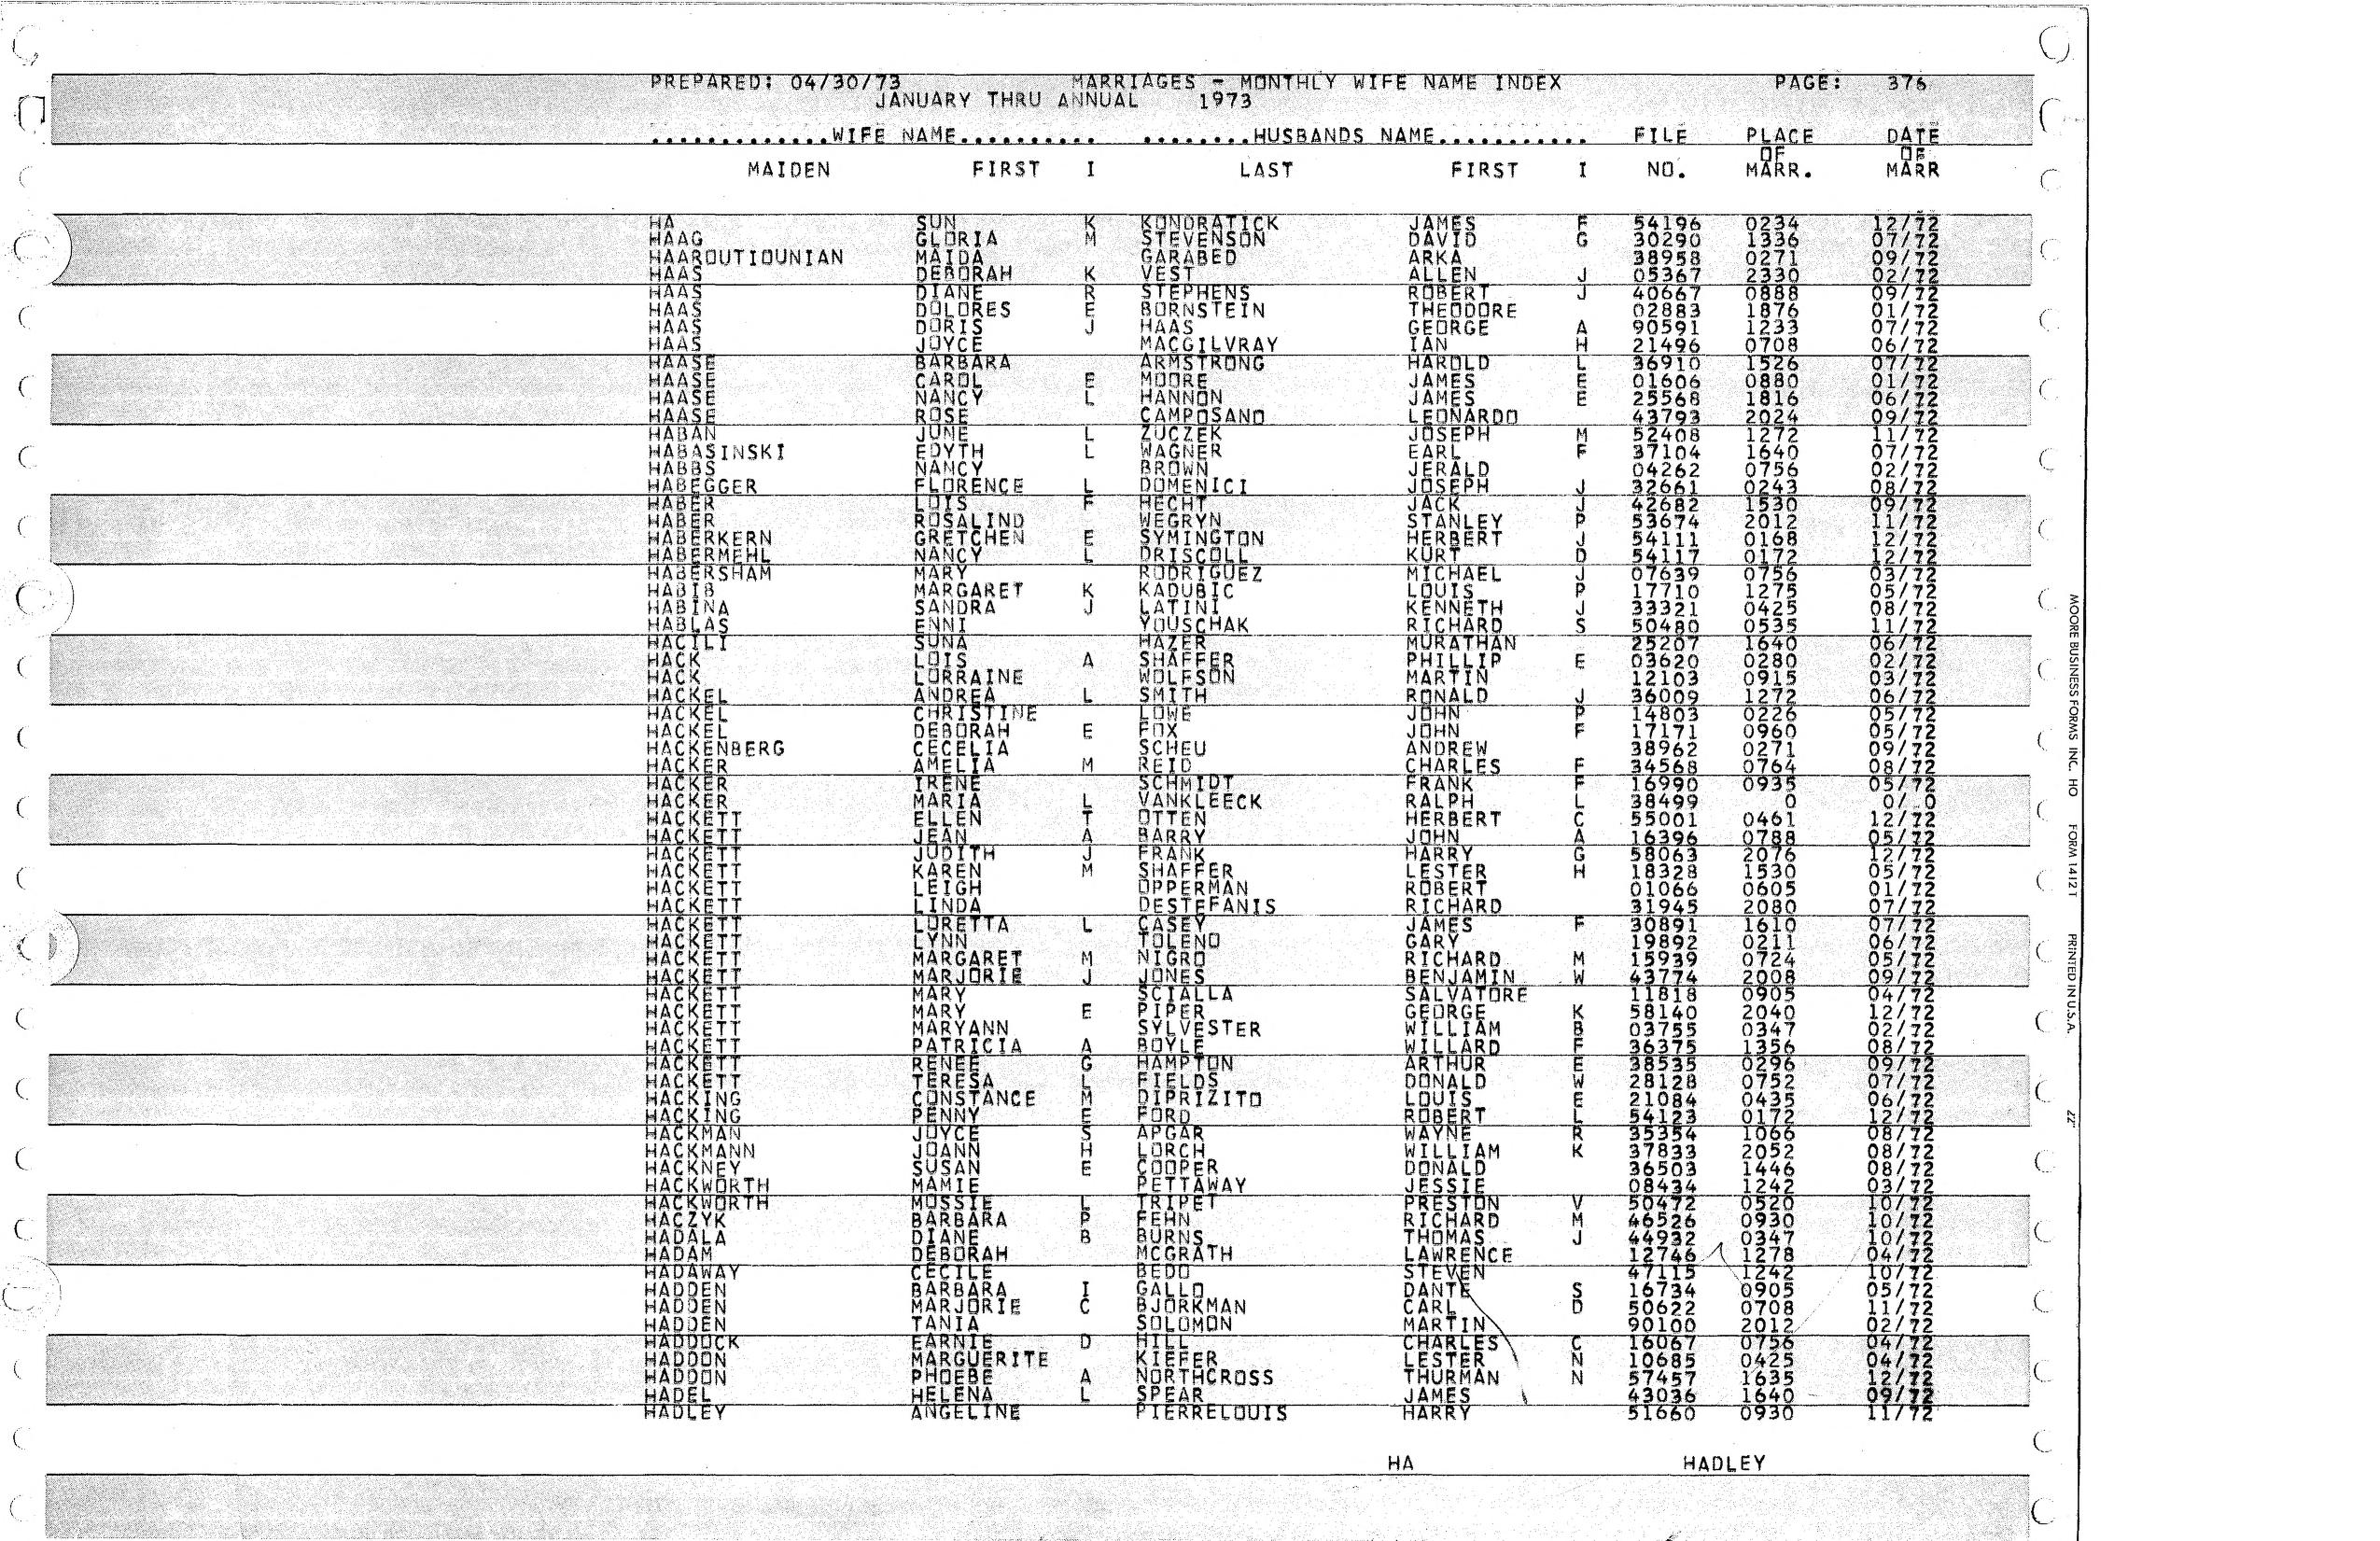 New Jersey Marriage Index (Brides) - 1972 - Surnames H-N : Reclaim 